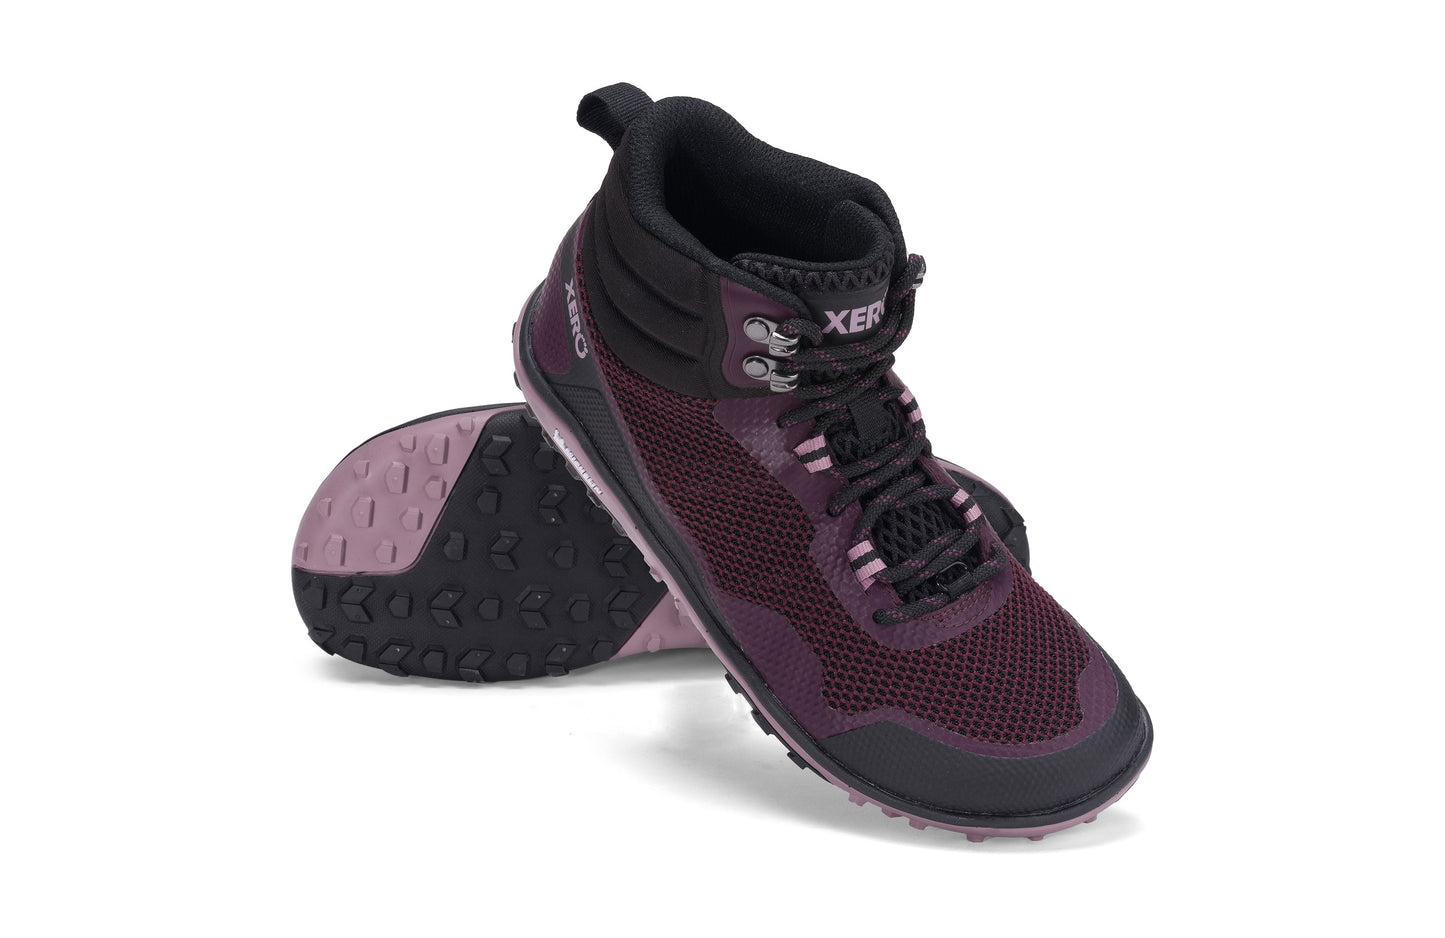 Xero Shoes Scrambler Mid Womens barfods lette vandrestøvler til kvinder i farven black / fig, par